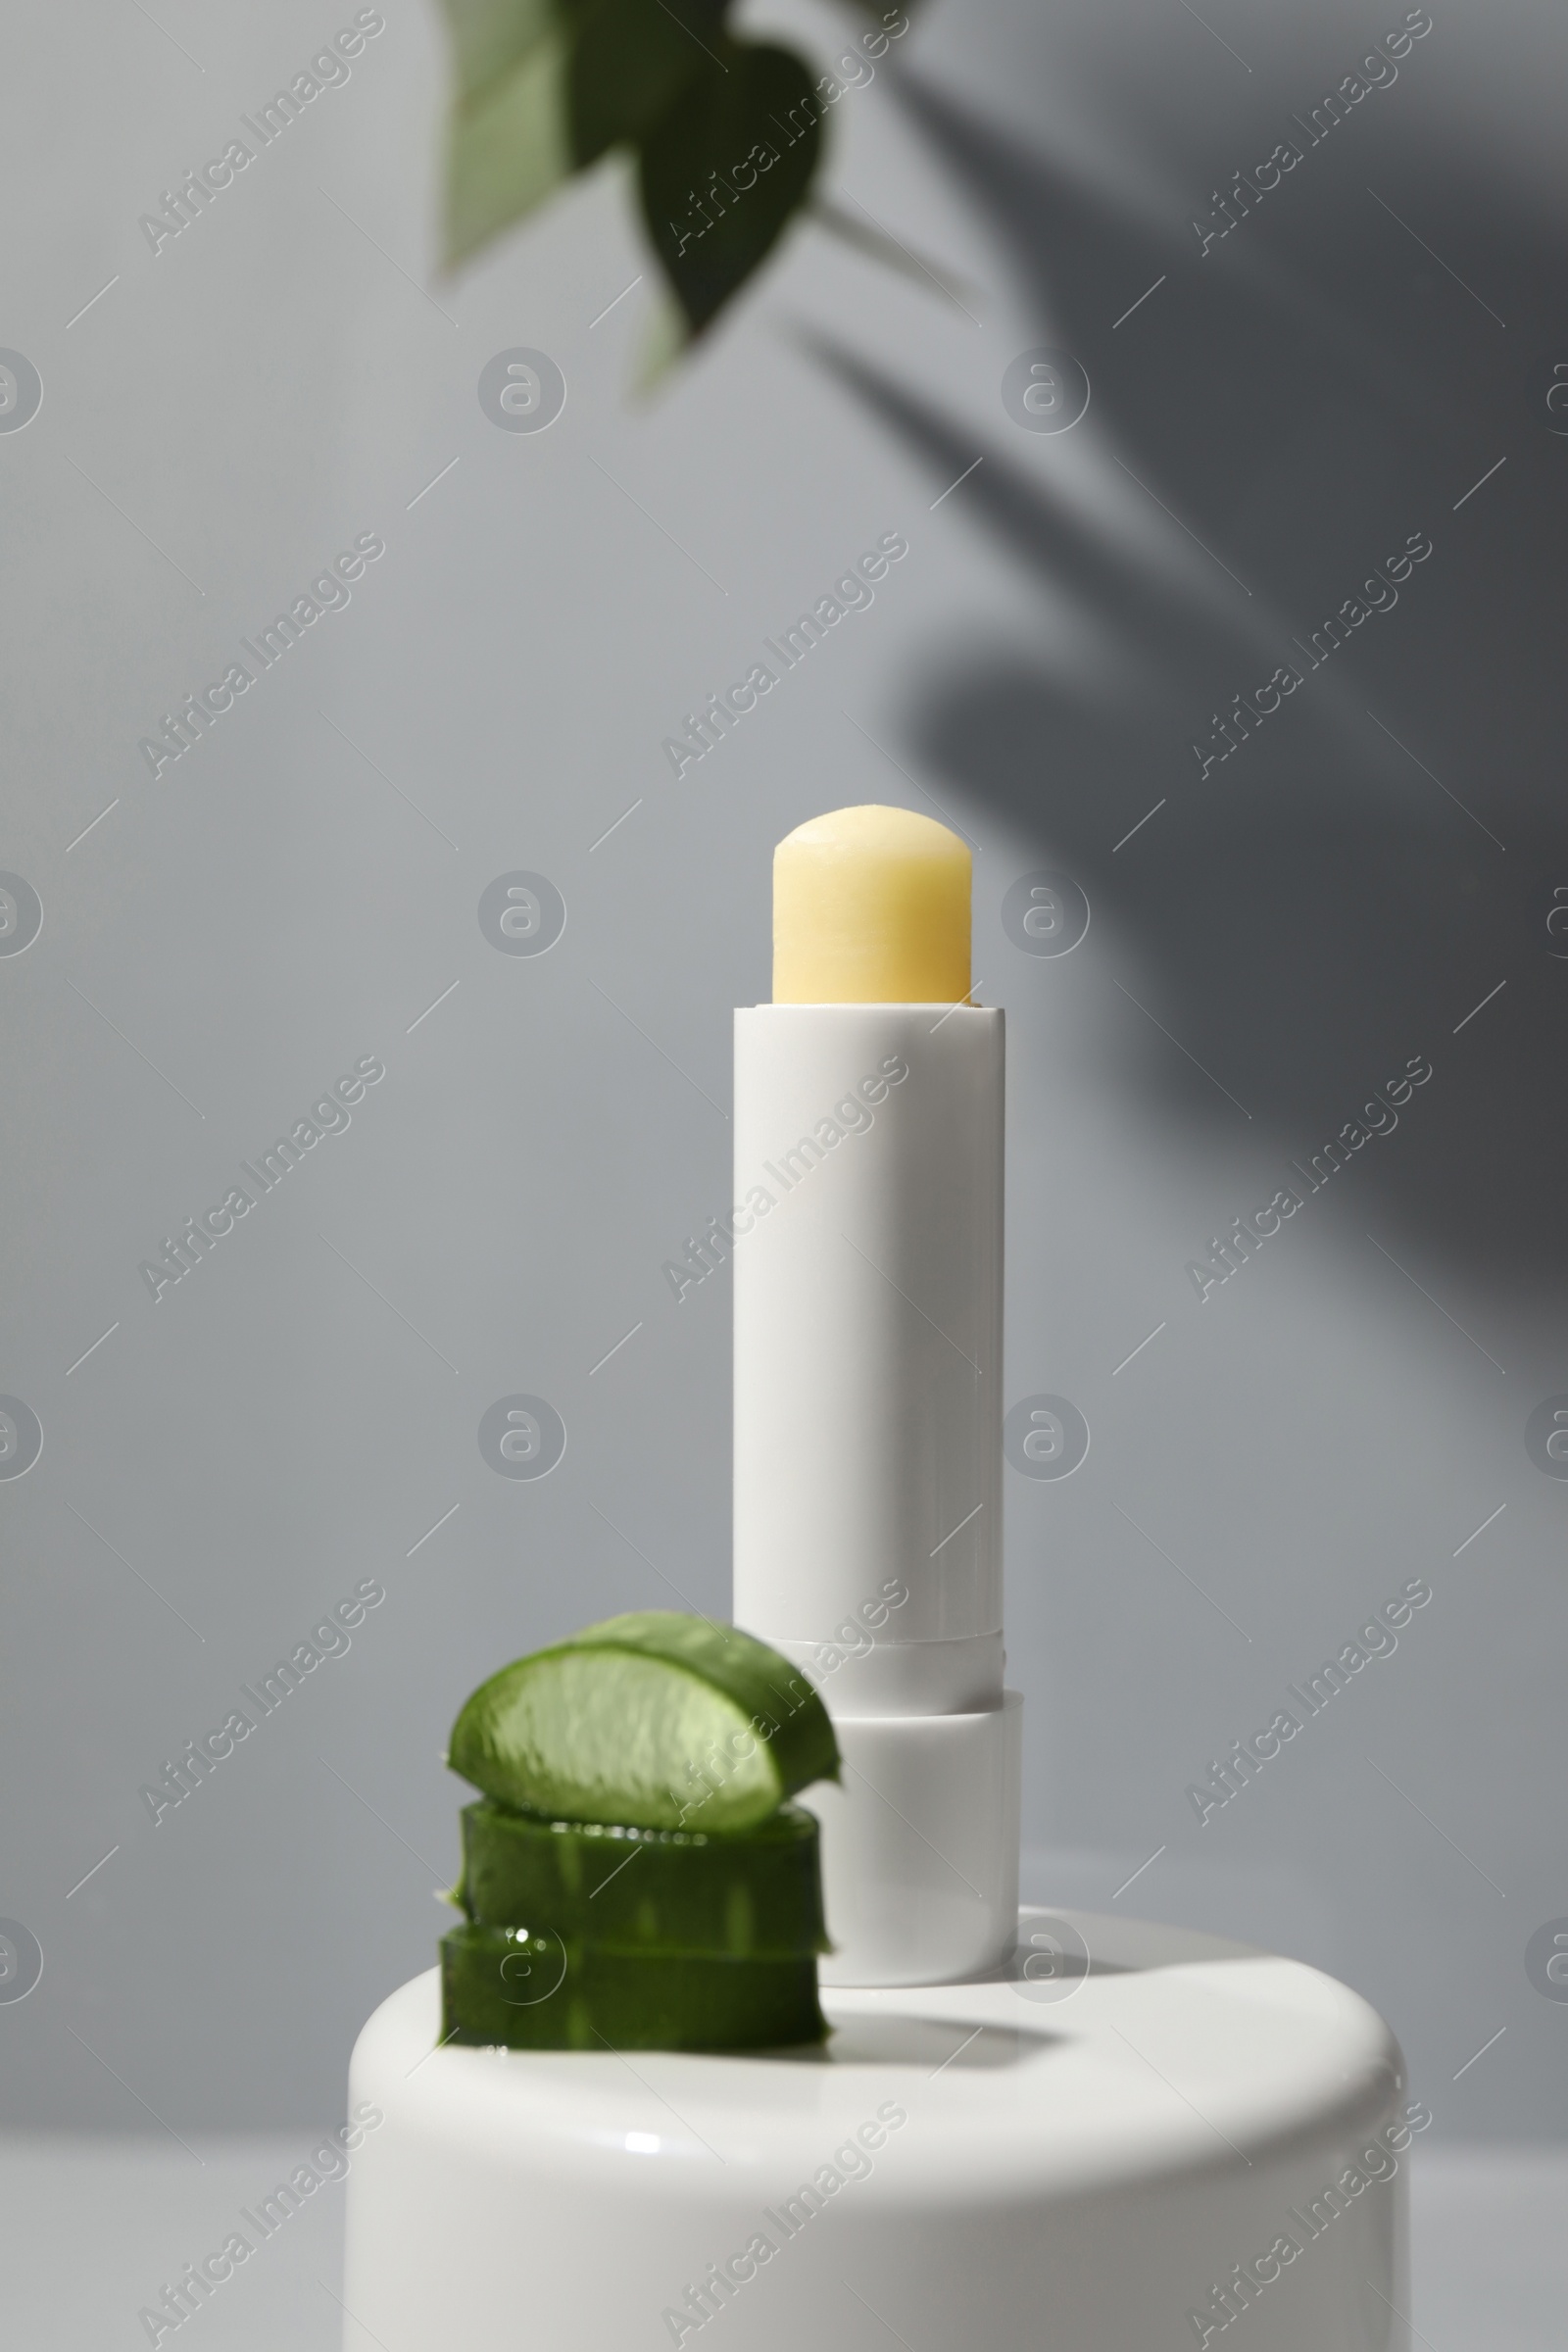 Photo of Hygienic lipstick and cut aloe vera leaf on light table